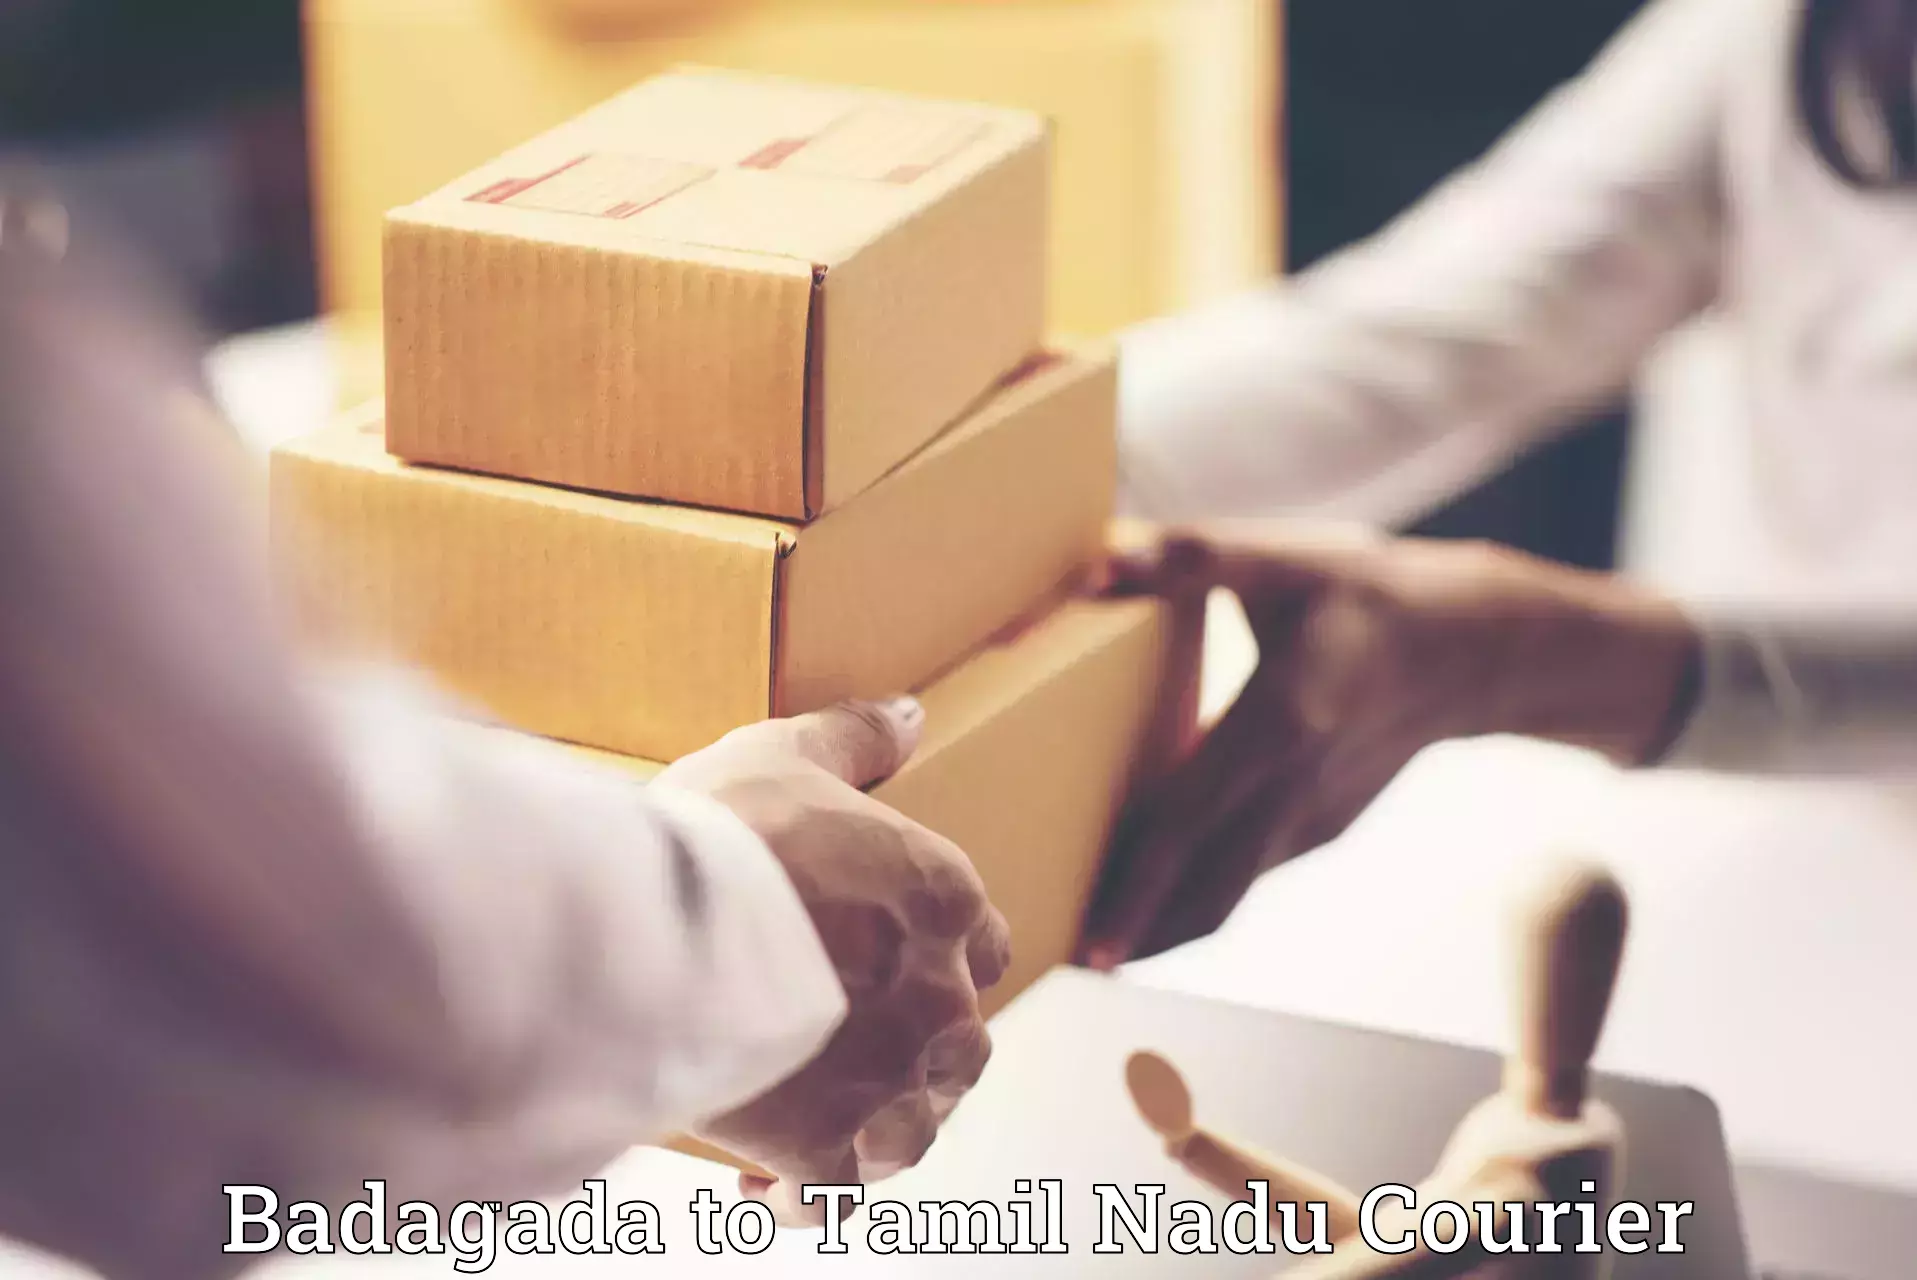 Professional movers Badagada to Tamil Nadu